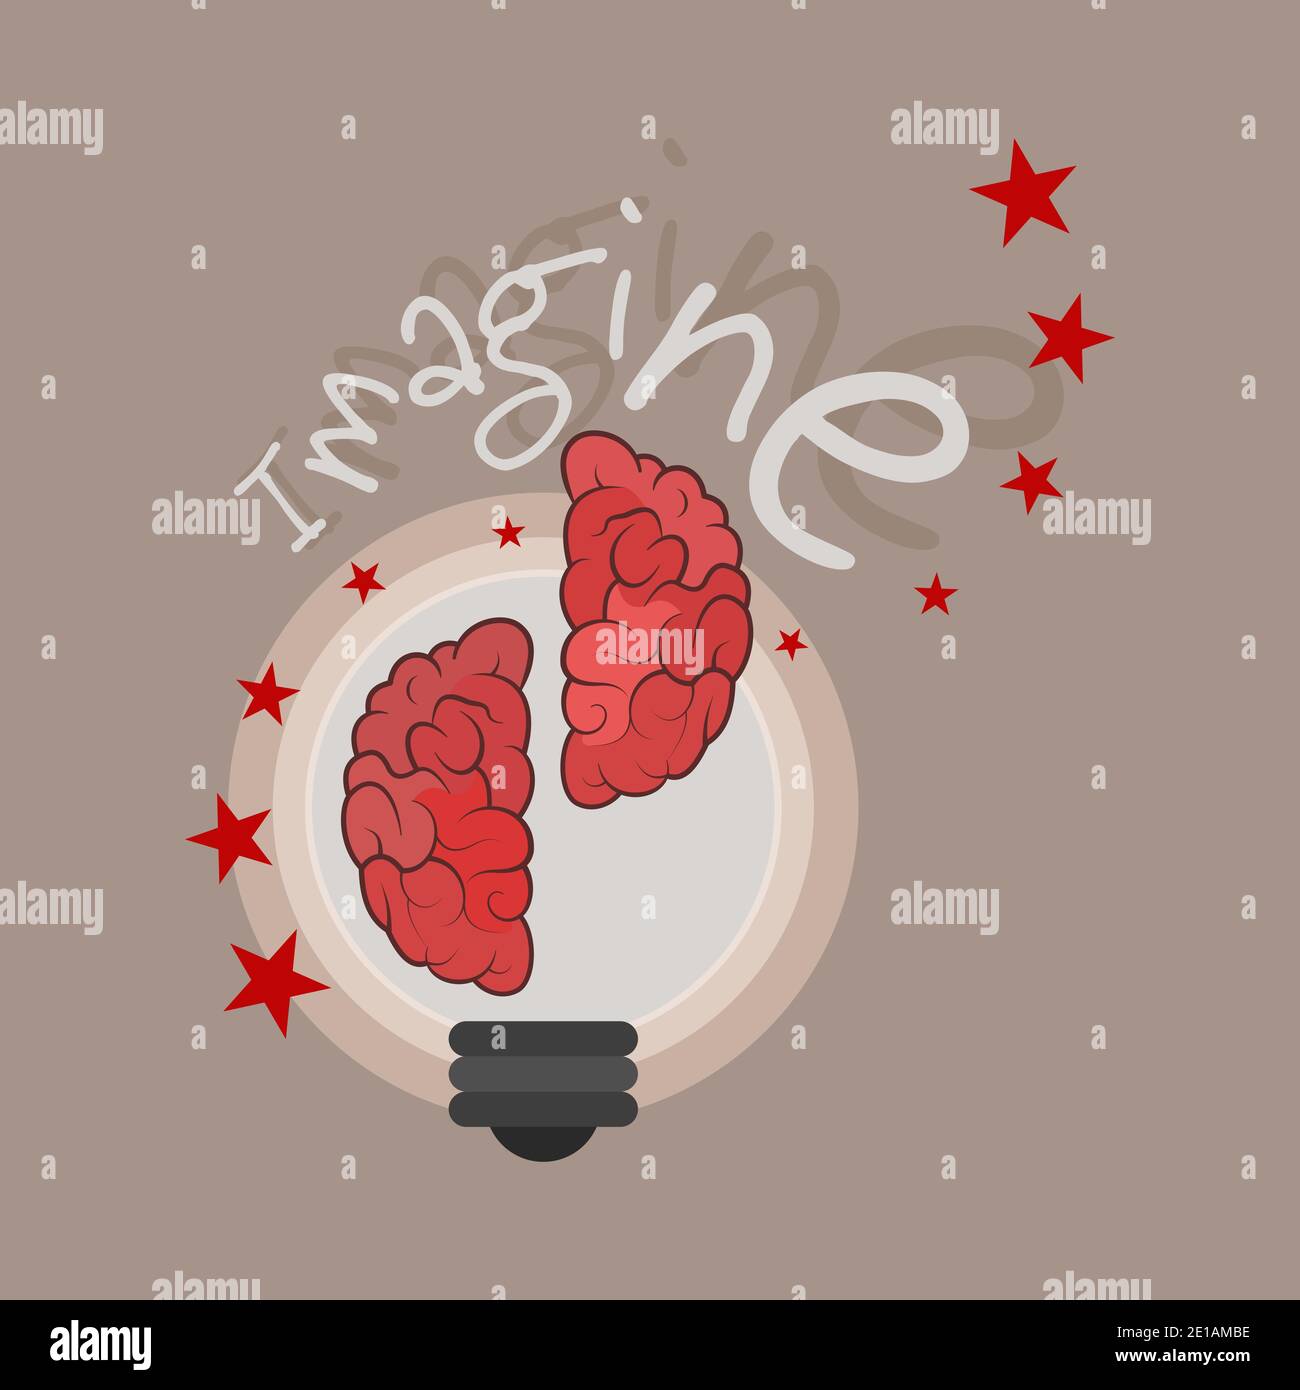 Human brain inside a light bulb with text Imagine. Creative idea and imagination concept. Flat style illustration. Stock Vector